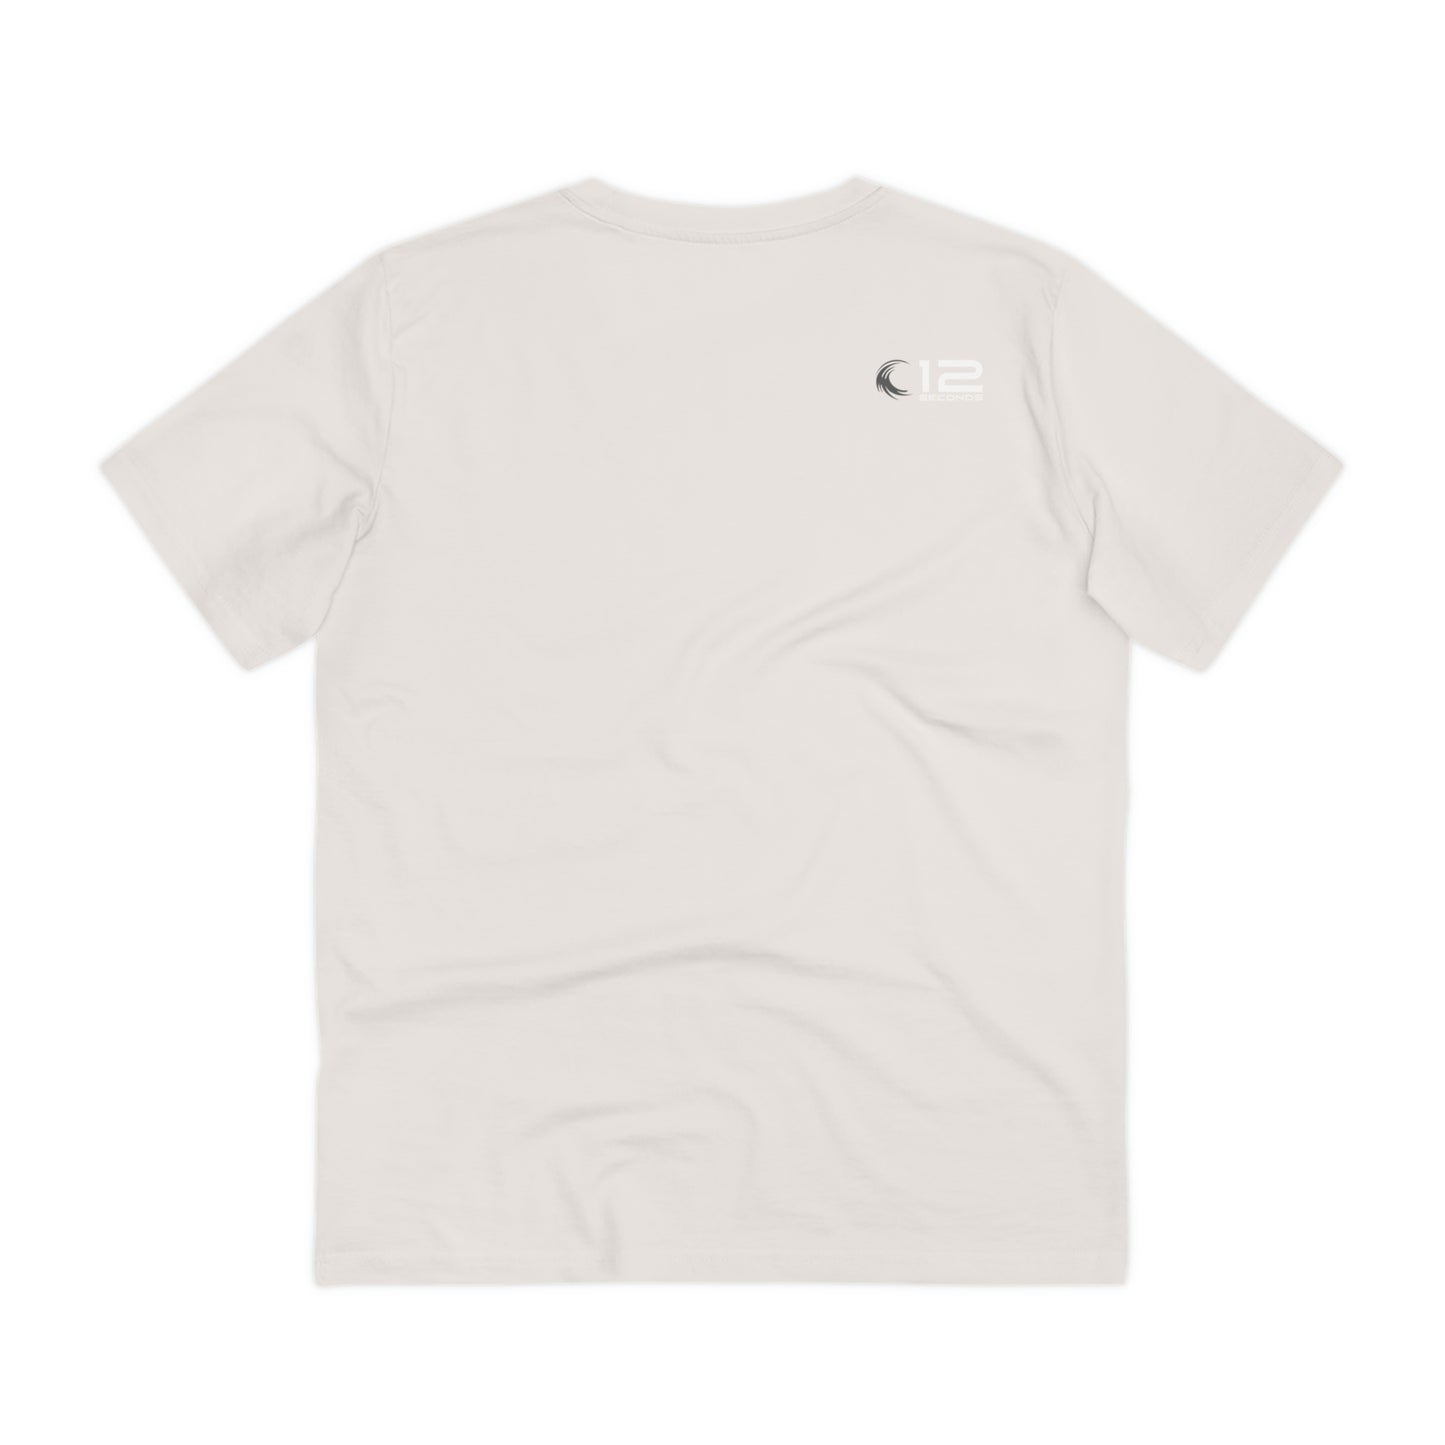 Organic T-shirt Unisex - Marine Beach - 12 SECONDS APPAREL